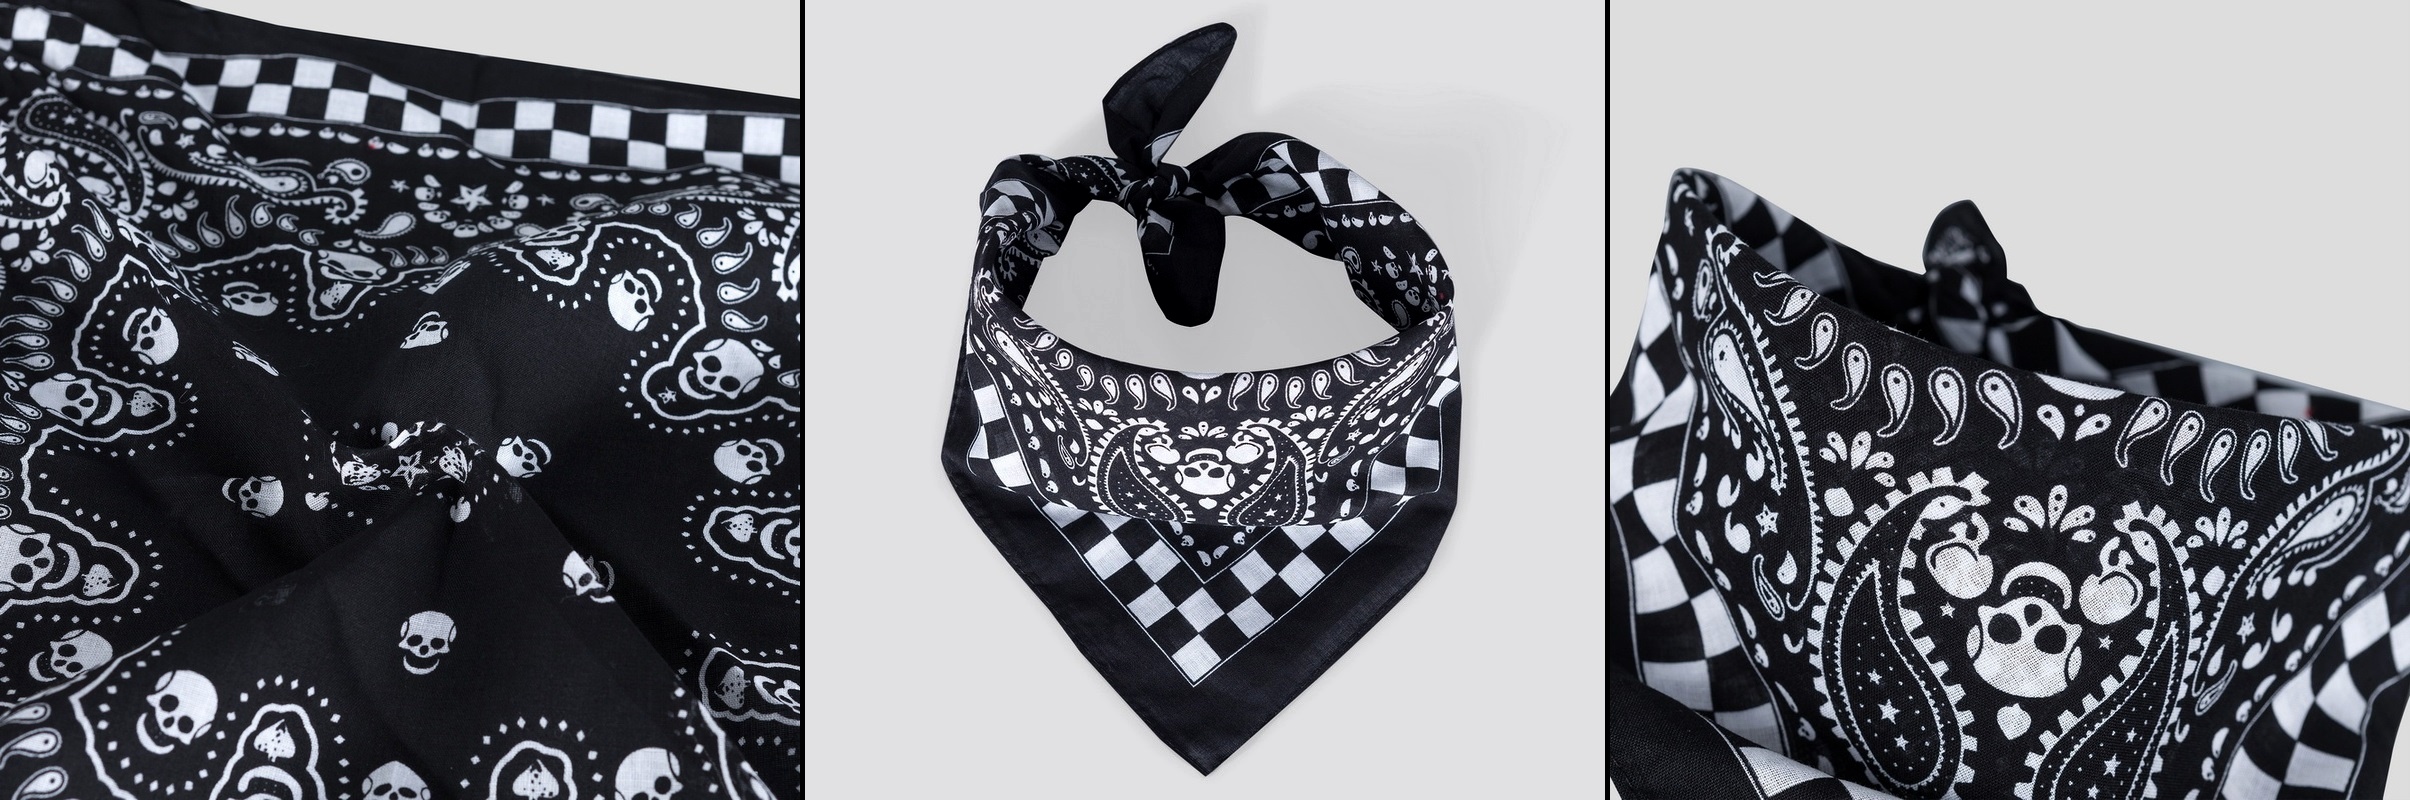 Šátek s paisley vzorem, lebkami a šachovnicí